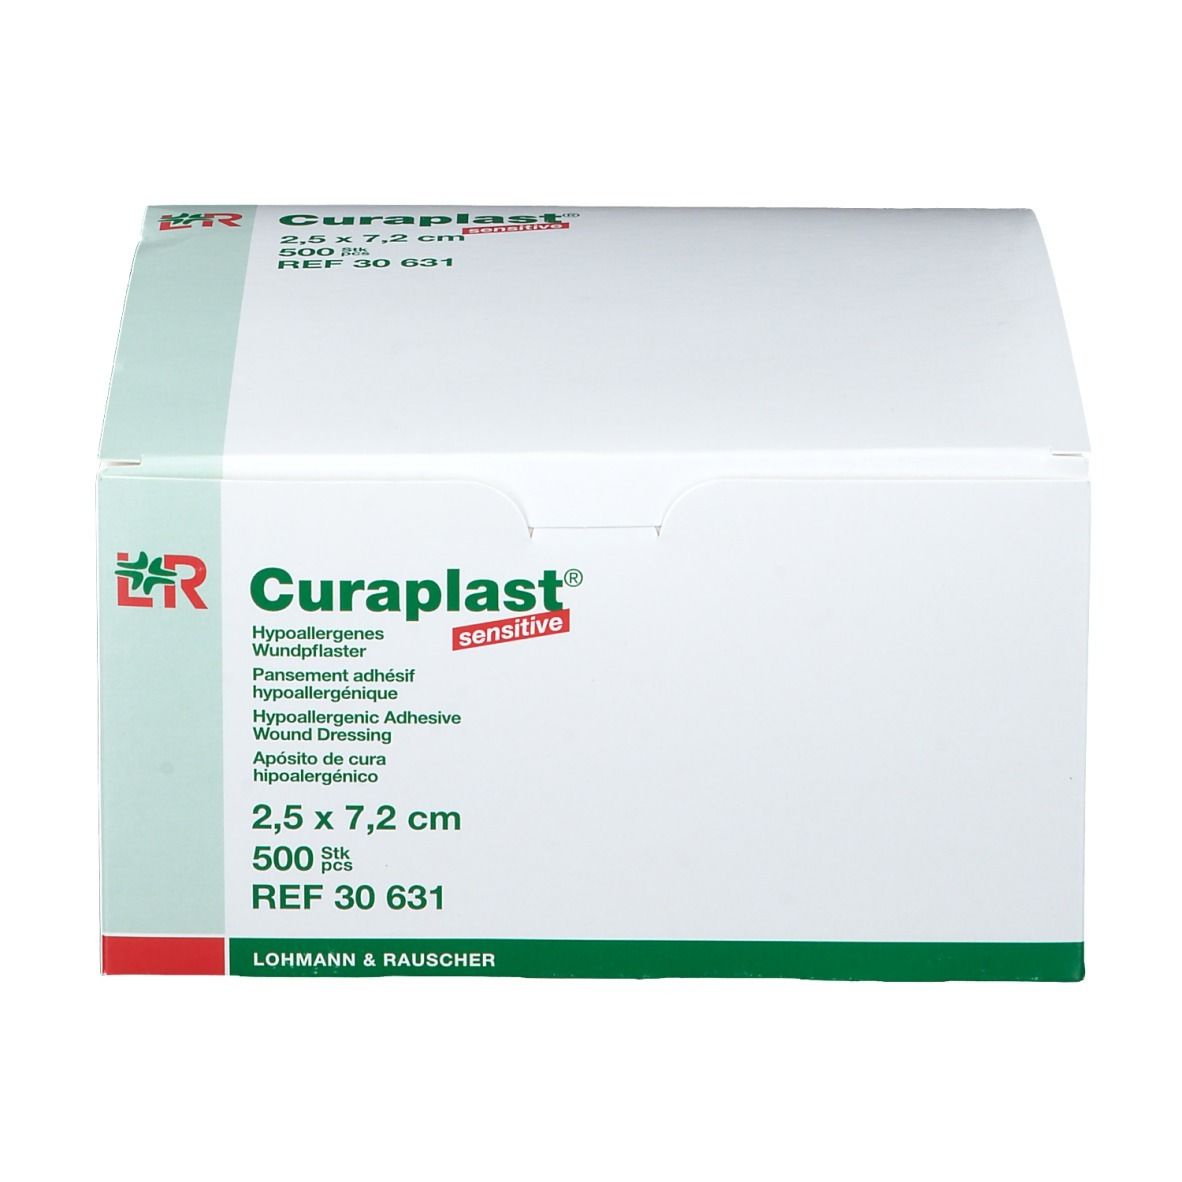 Curaplast® sensitiv strips 2,5 cm x 7,2 cm